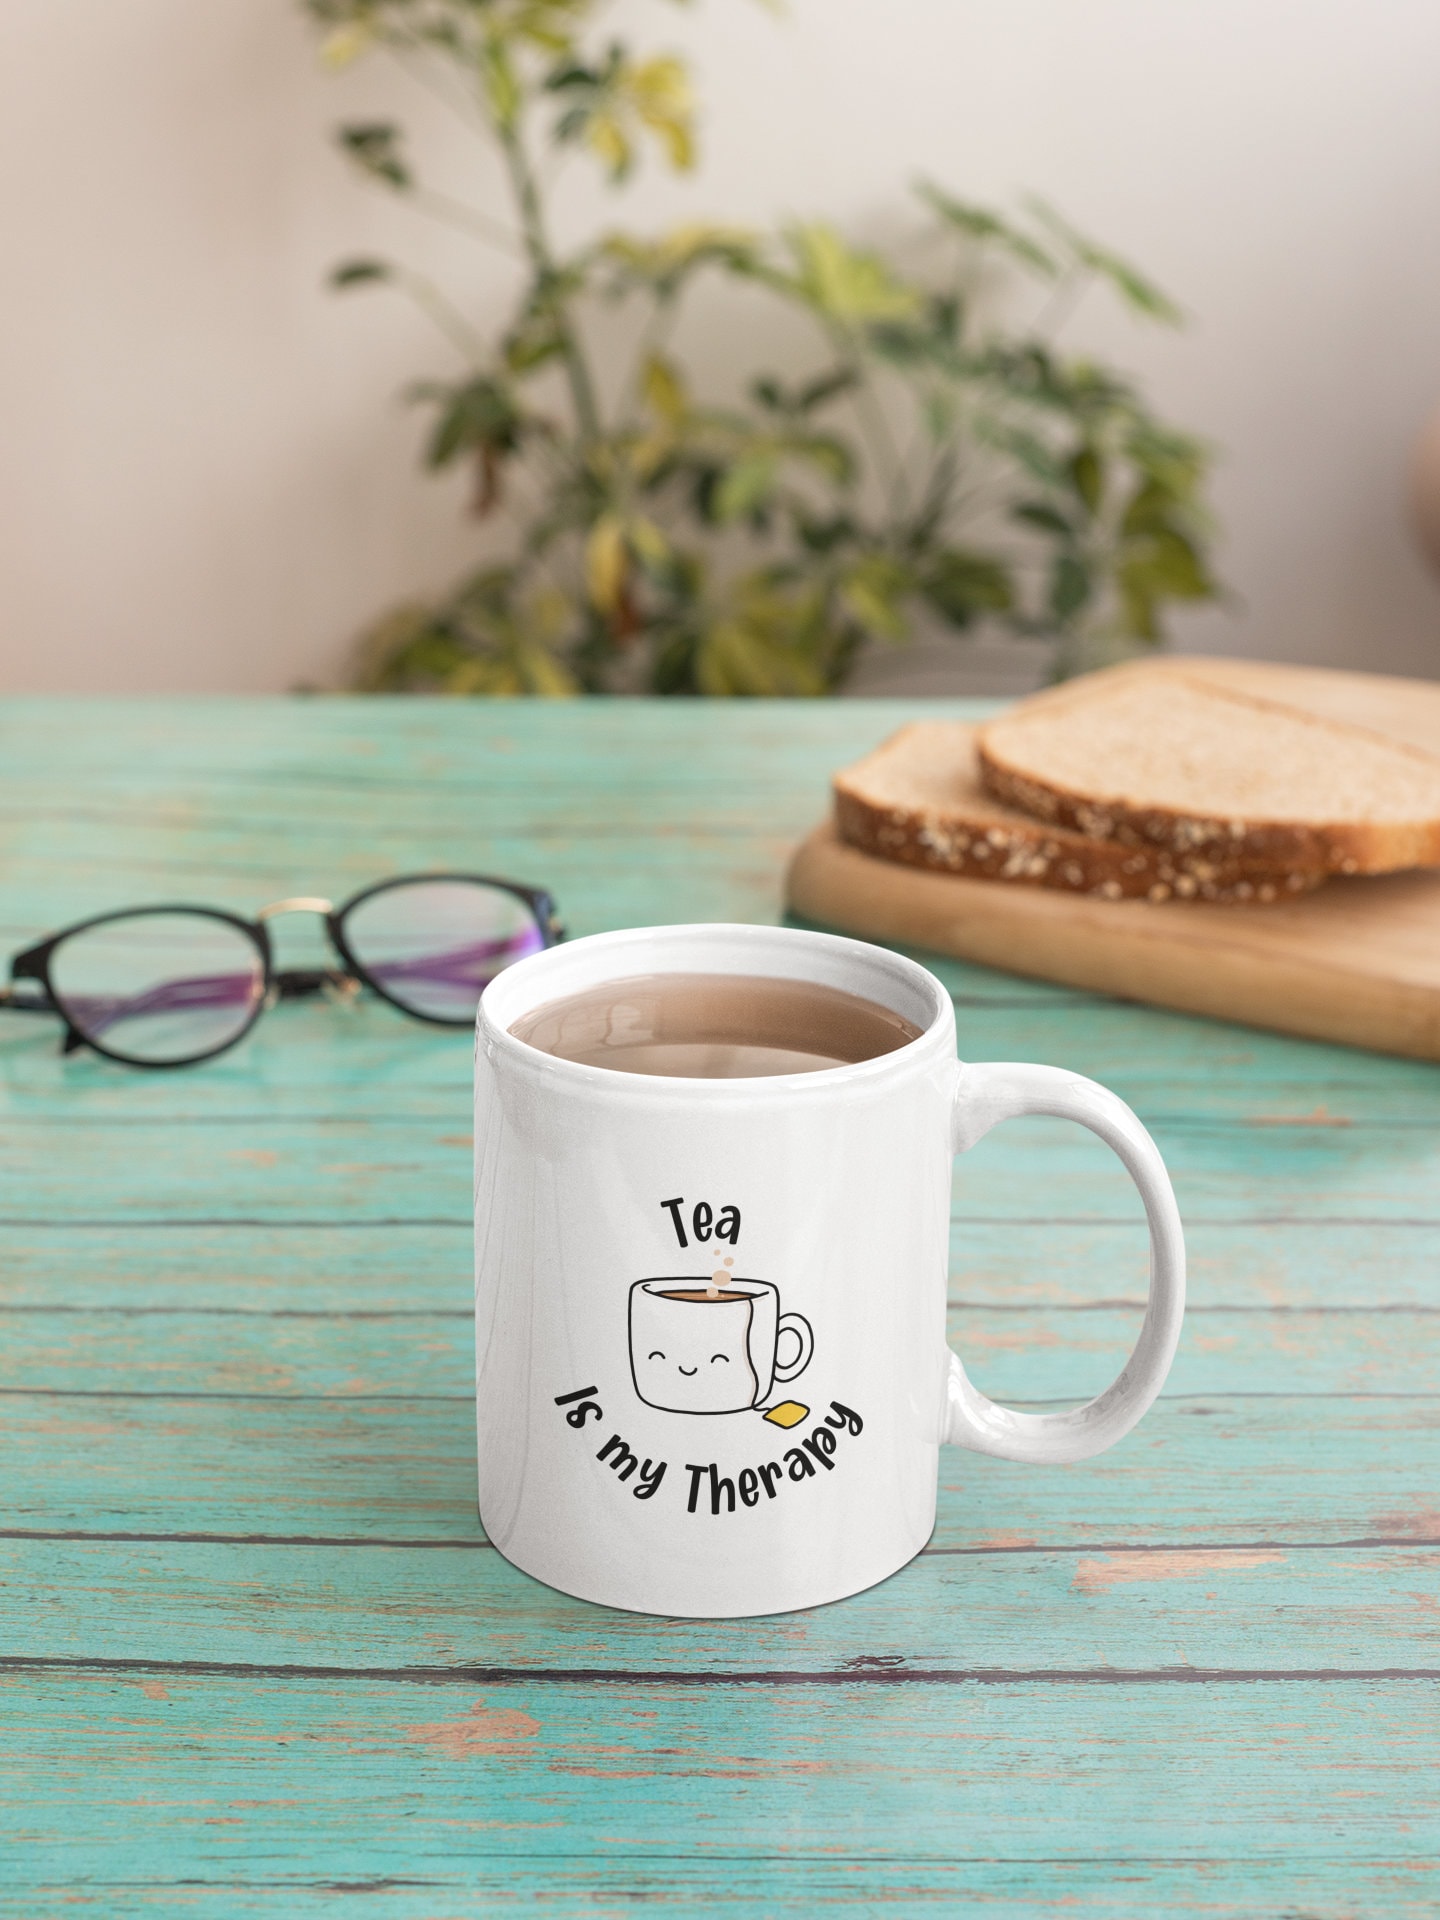 Therapy is Like Tea Black Coffee Cup, SM Coffee Mug, Funny Therapy